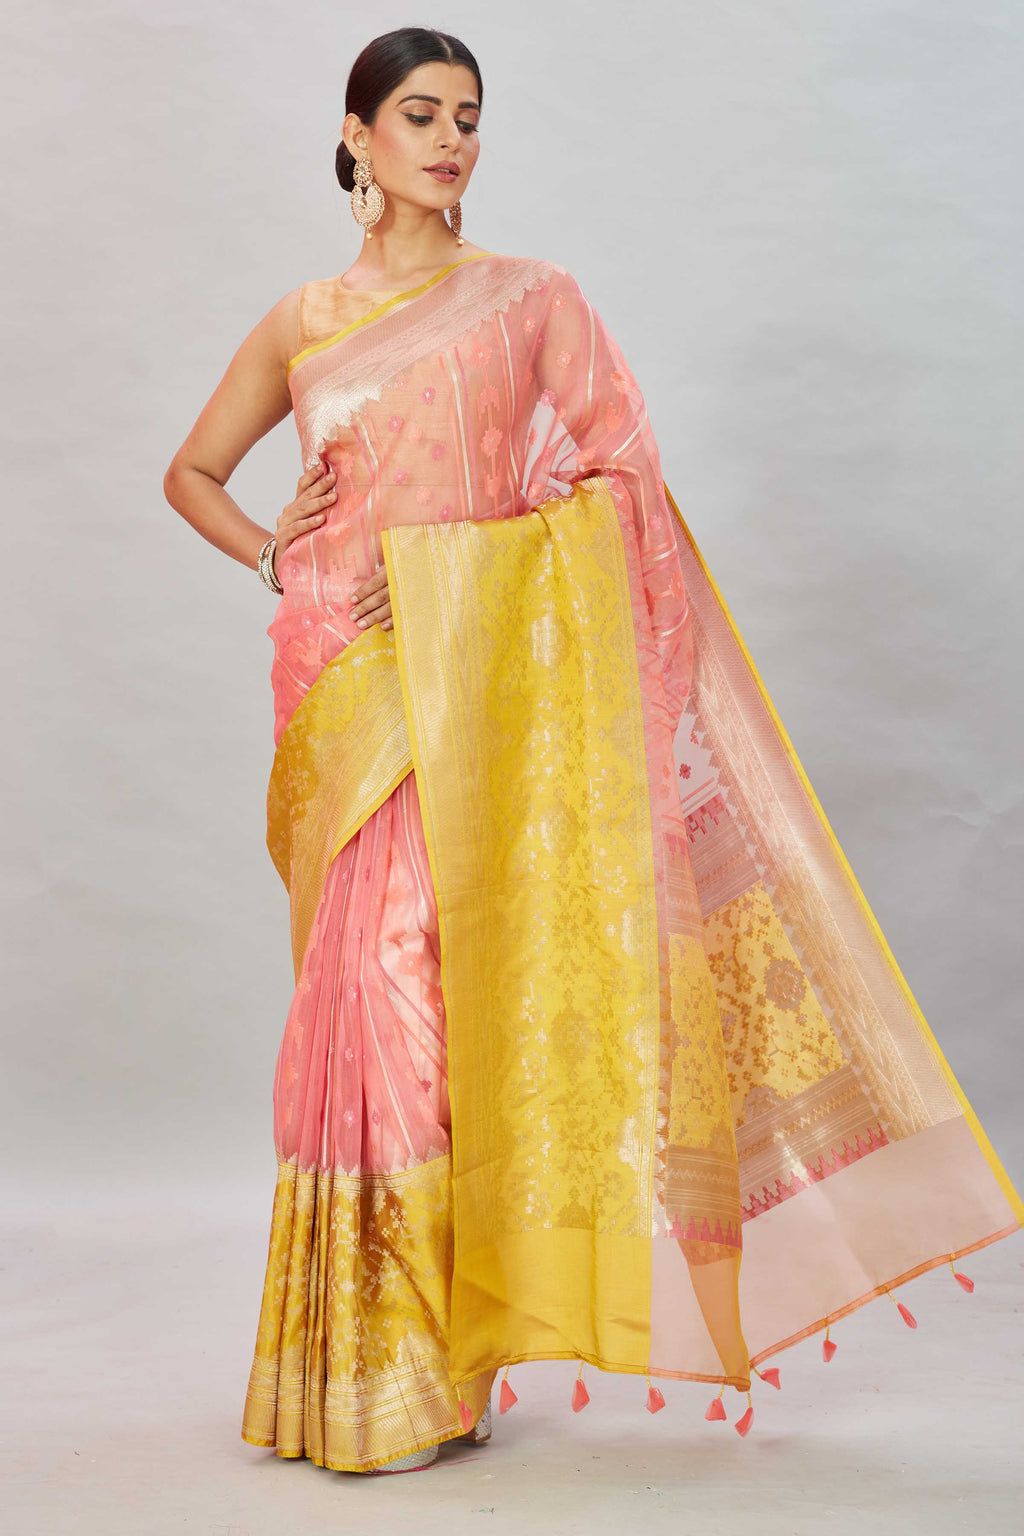 Buy stunning pink Kora Banarasi sari online in USA with yellow border. Look your best on festive occasions in latest designer sarees, pure silk sarees, Kanjivaram silk saris, handwoven saris, tussar silk sarees, embroidered saris from Pure Elegance Indian clothing store in USA.-full view